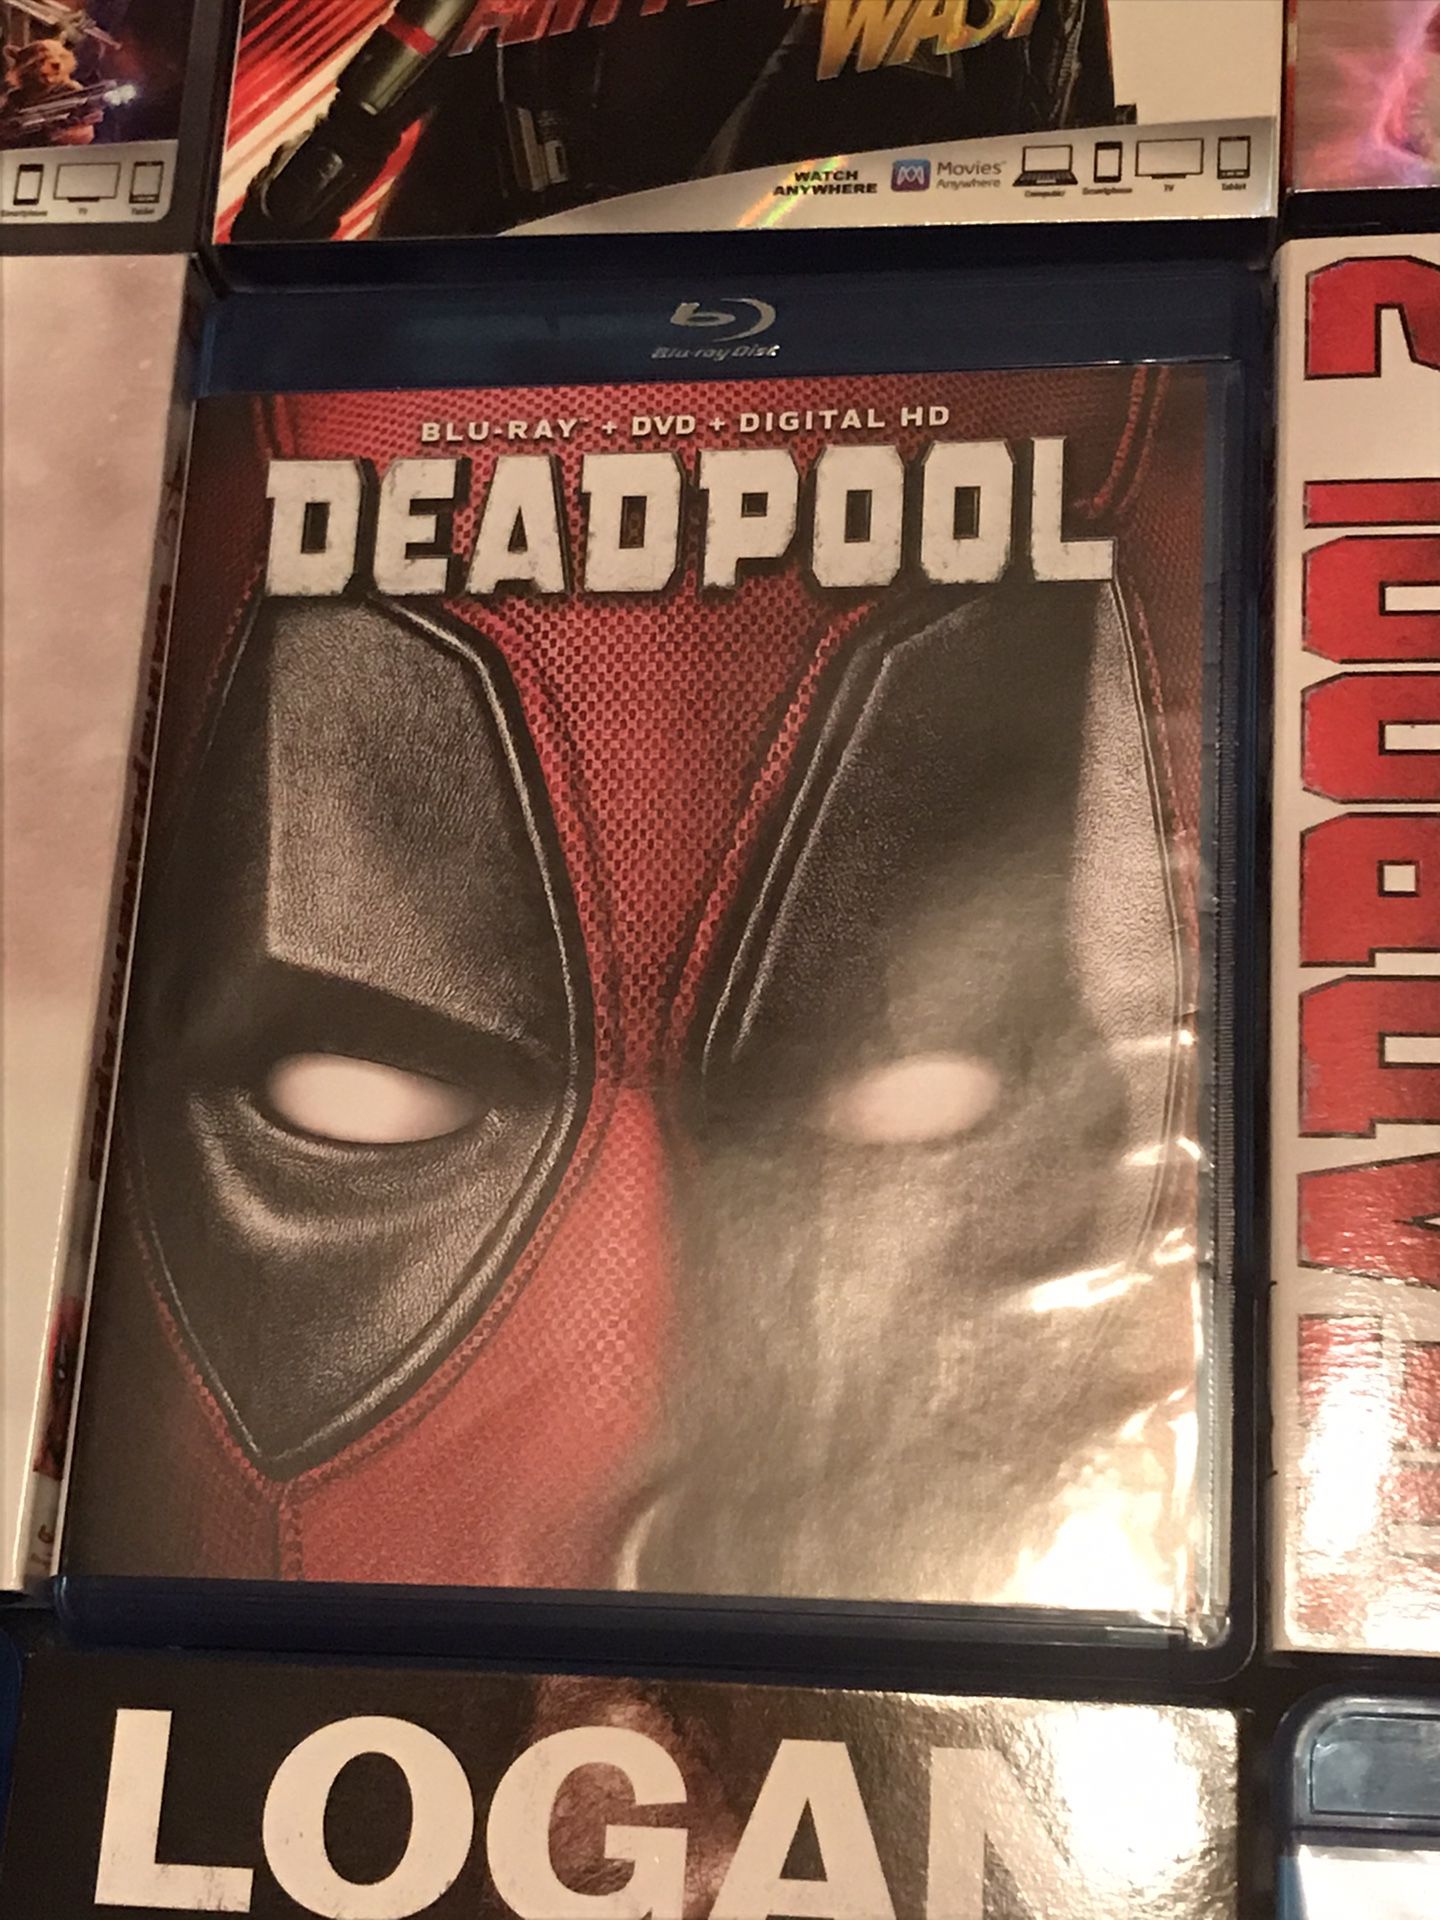 Deadpool Blu-ray DVD